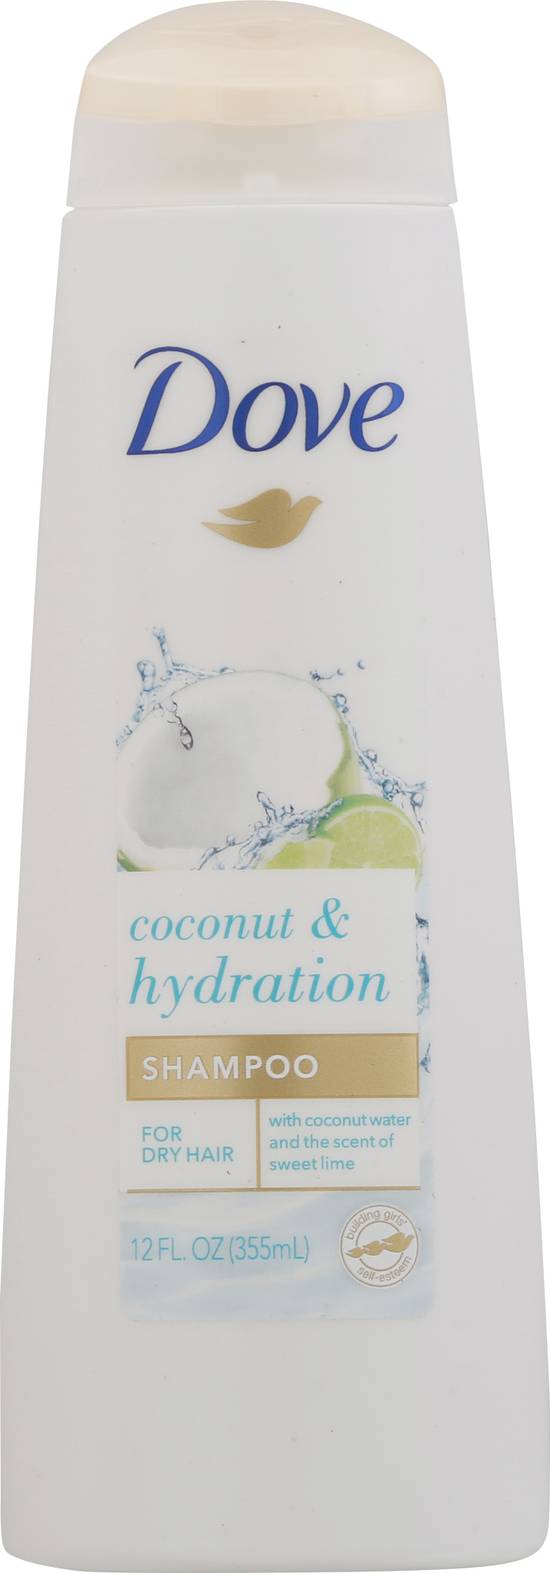 Dove Coconut & Hydration Shampoo (12 fl oz)